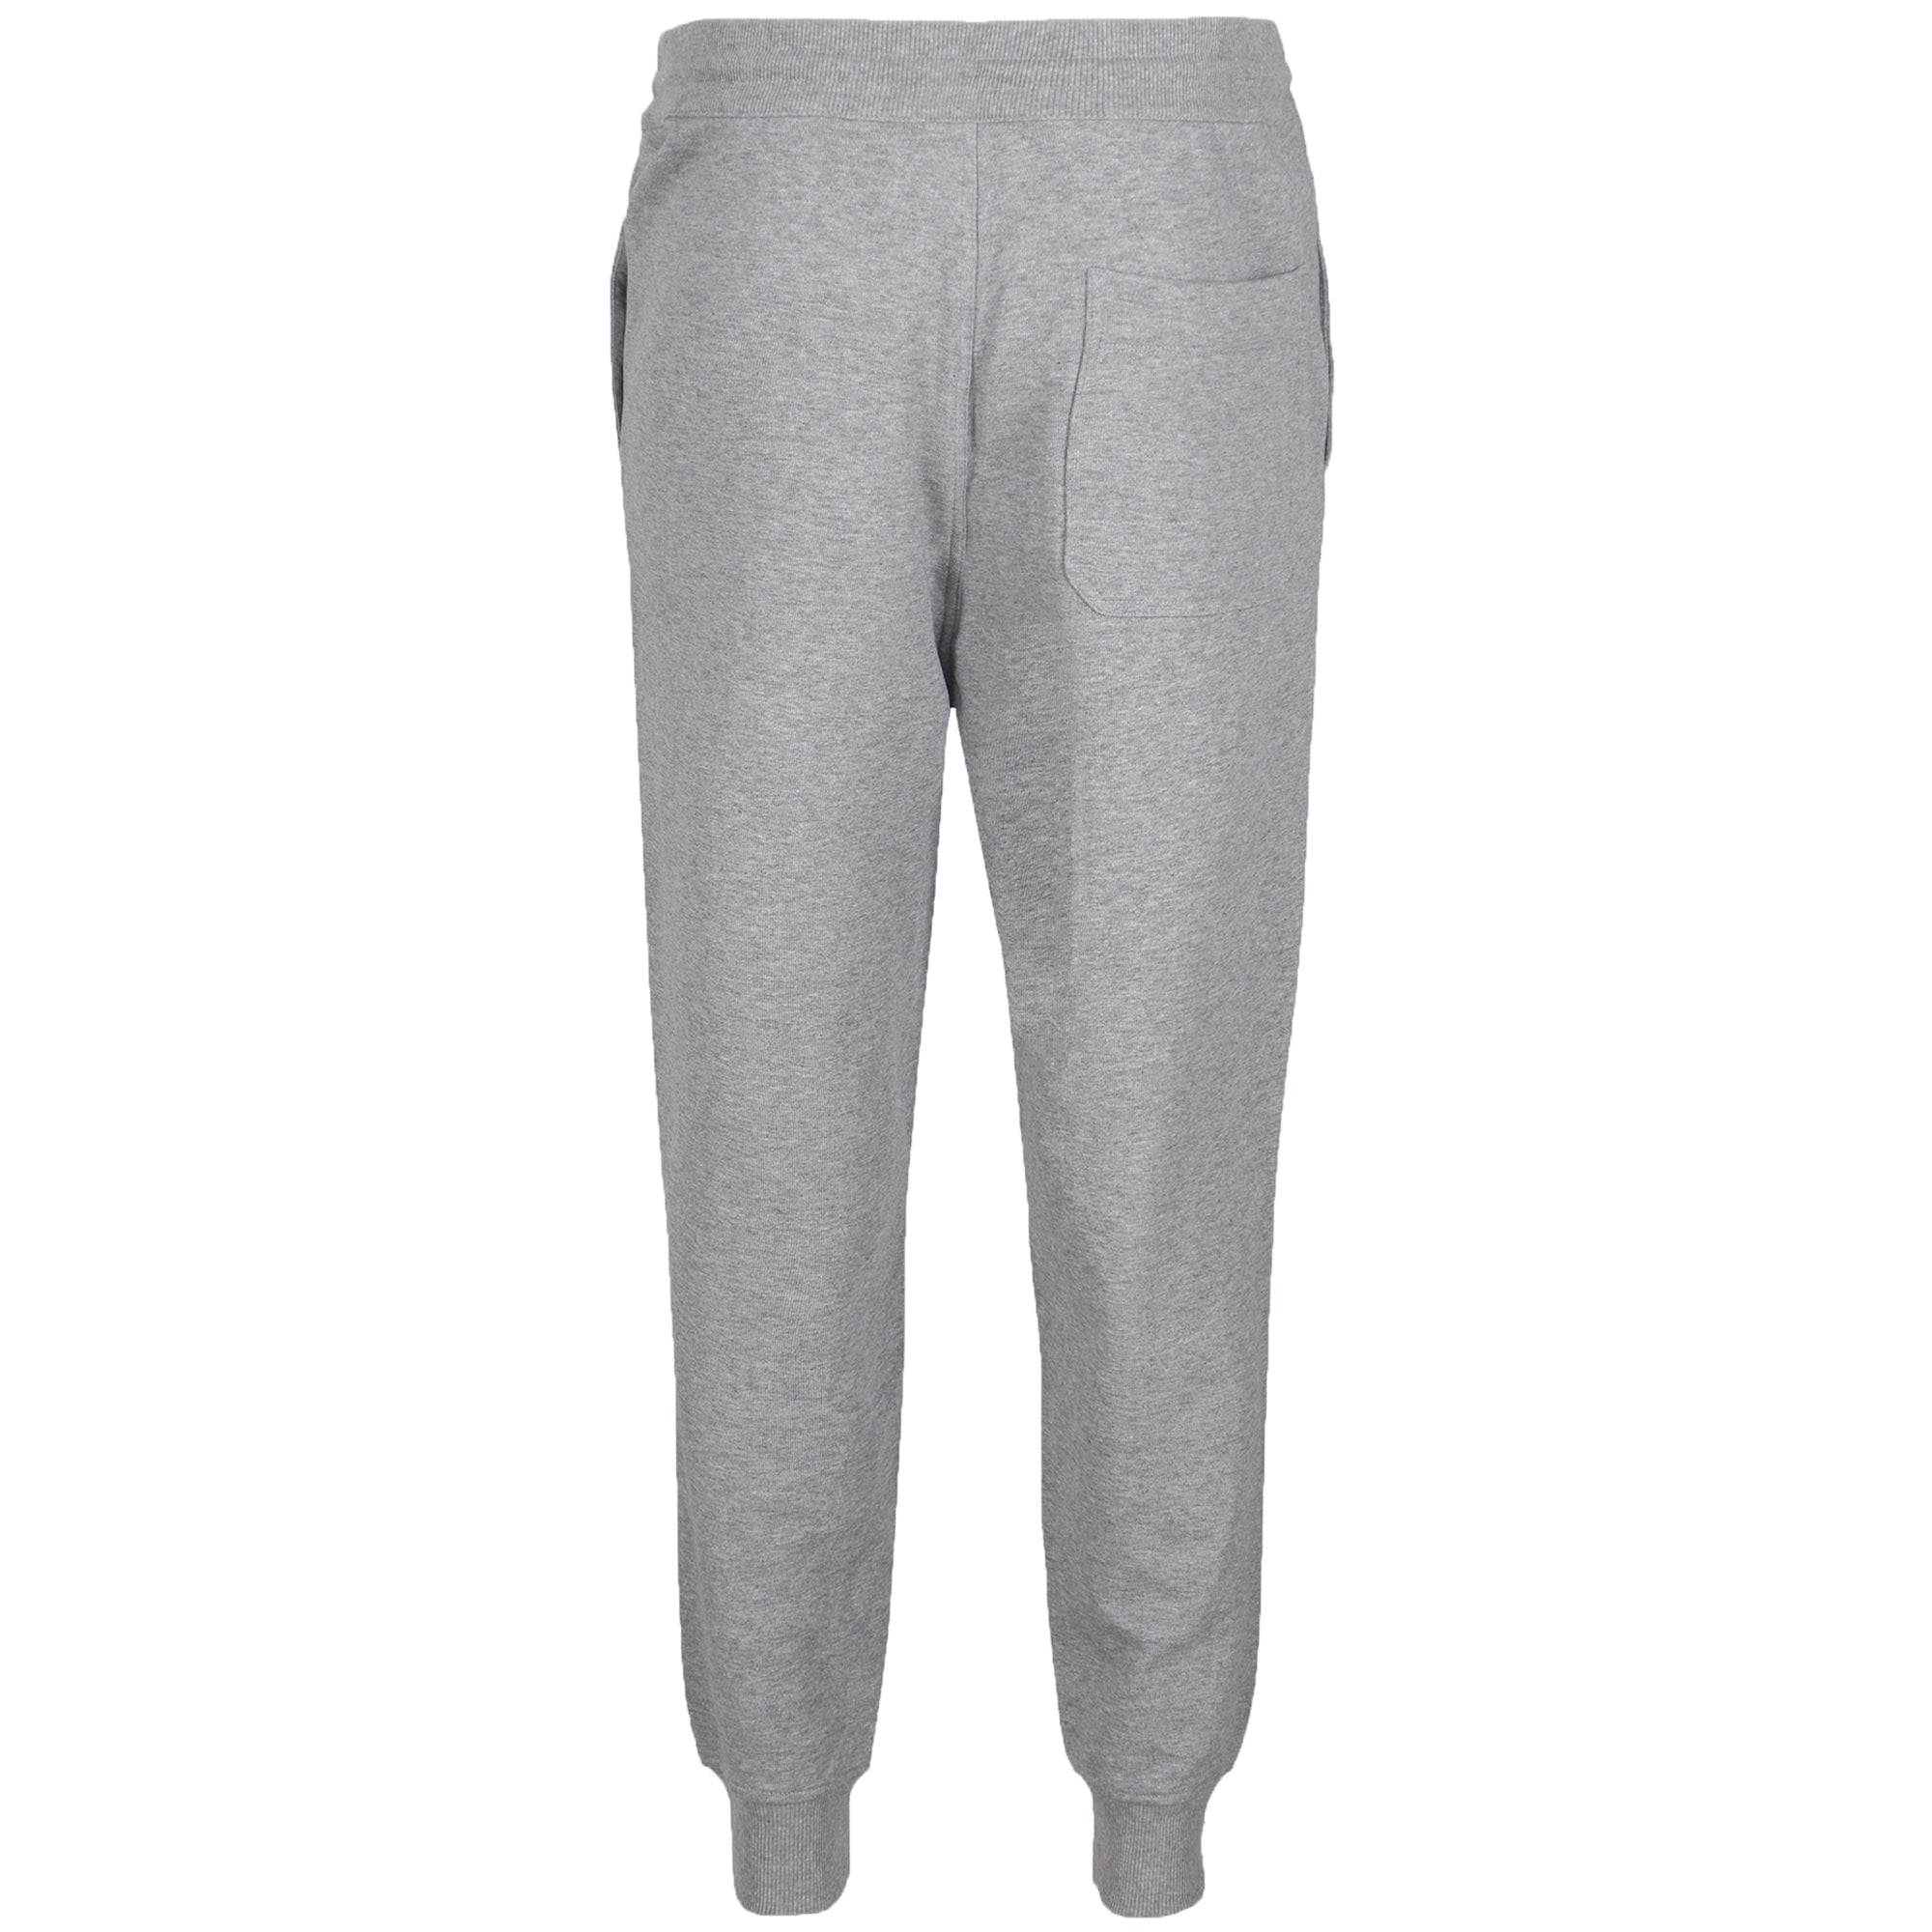 FT CUF Pant Grey XL